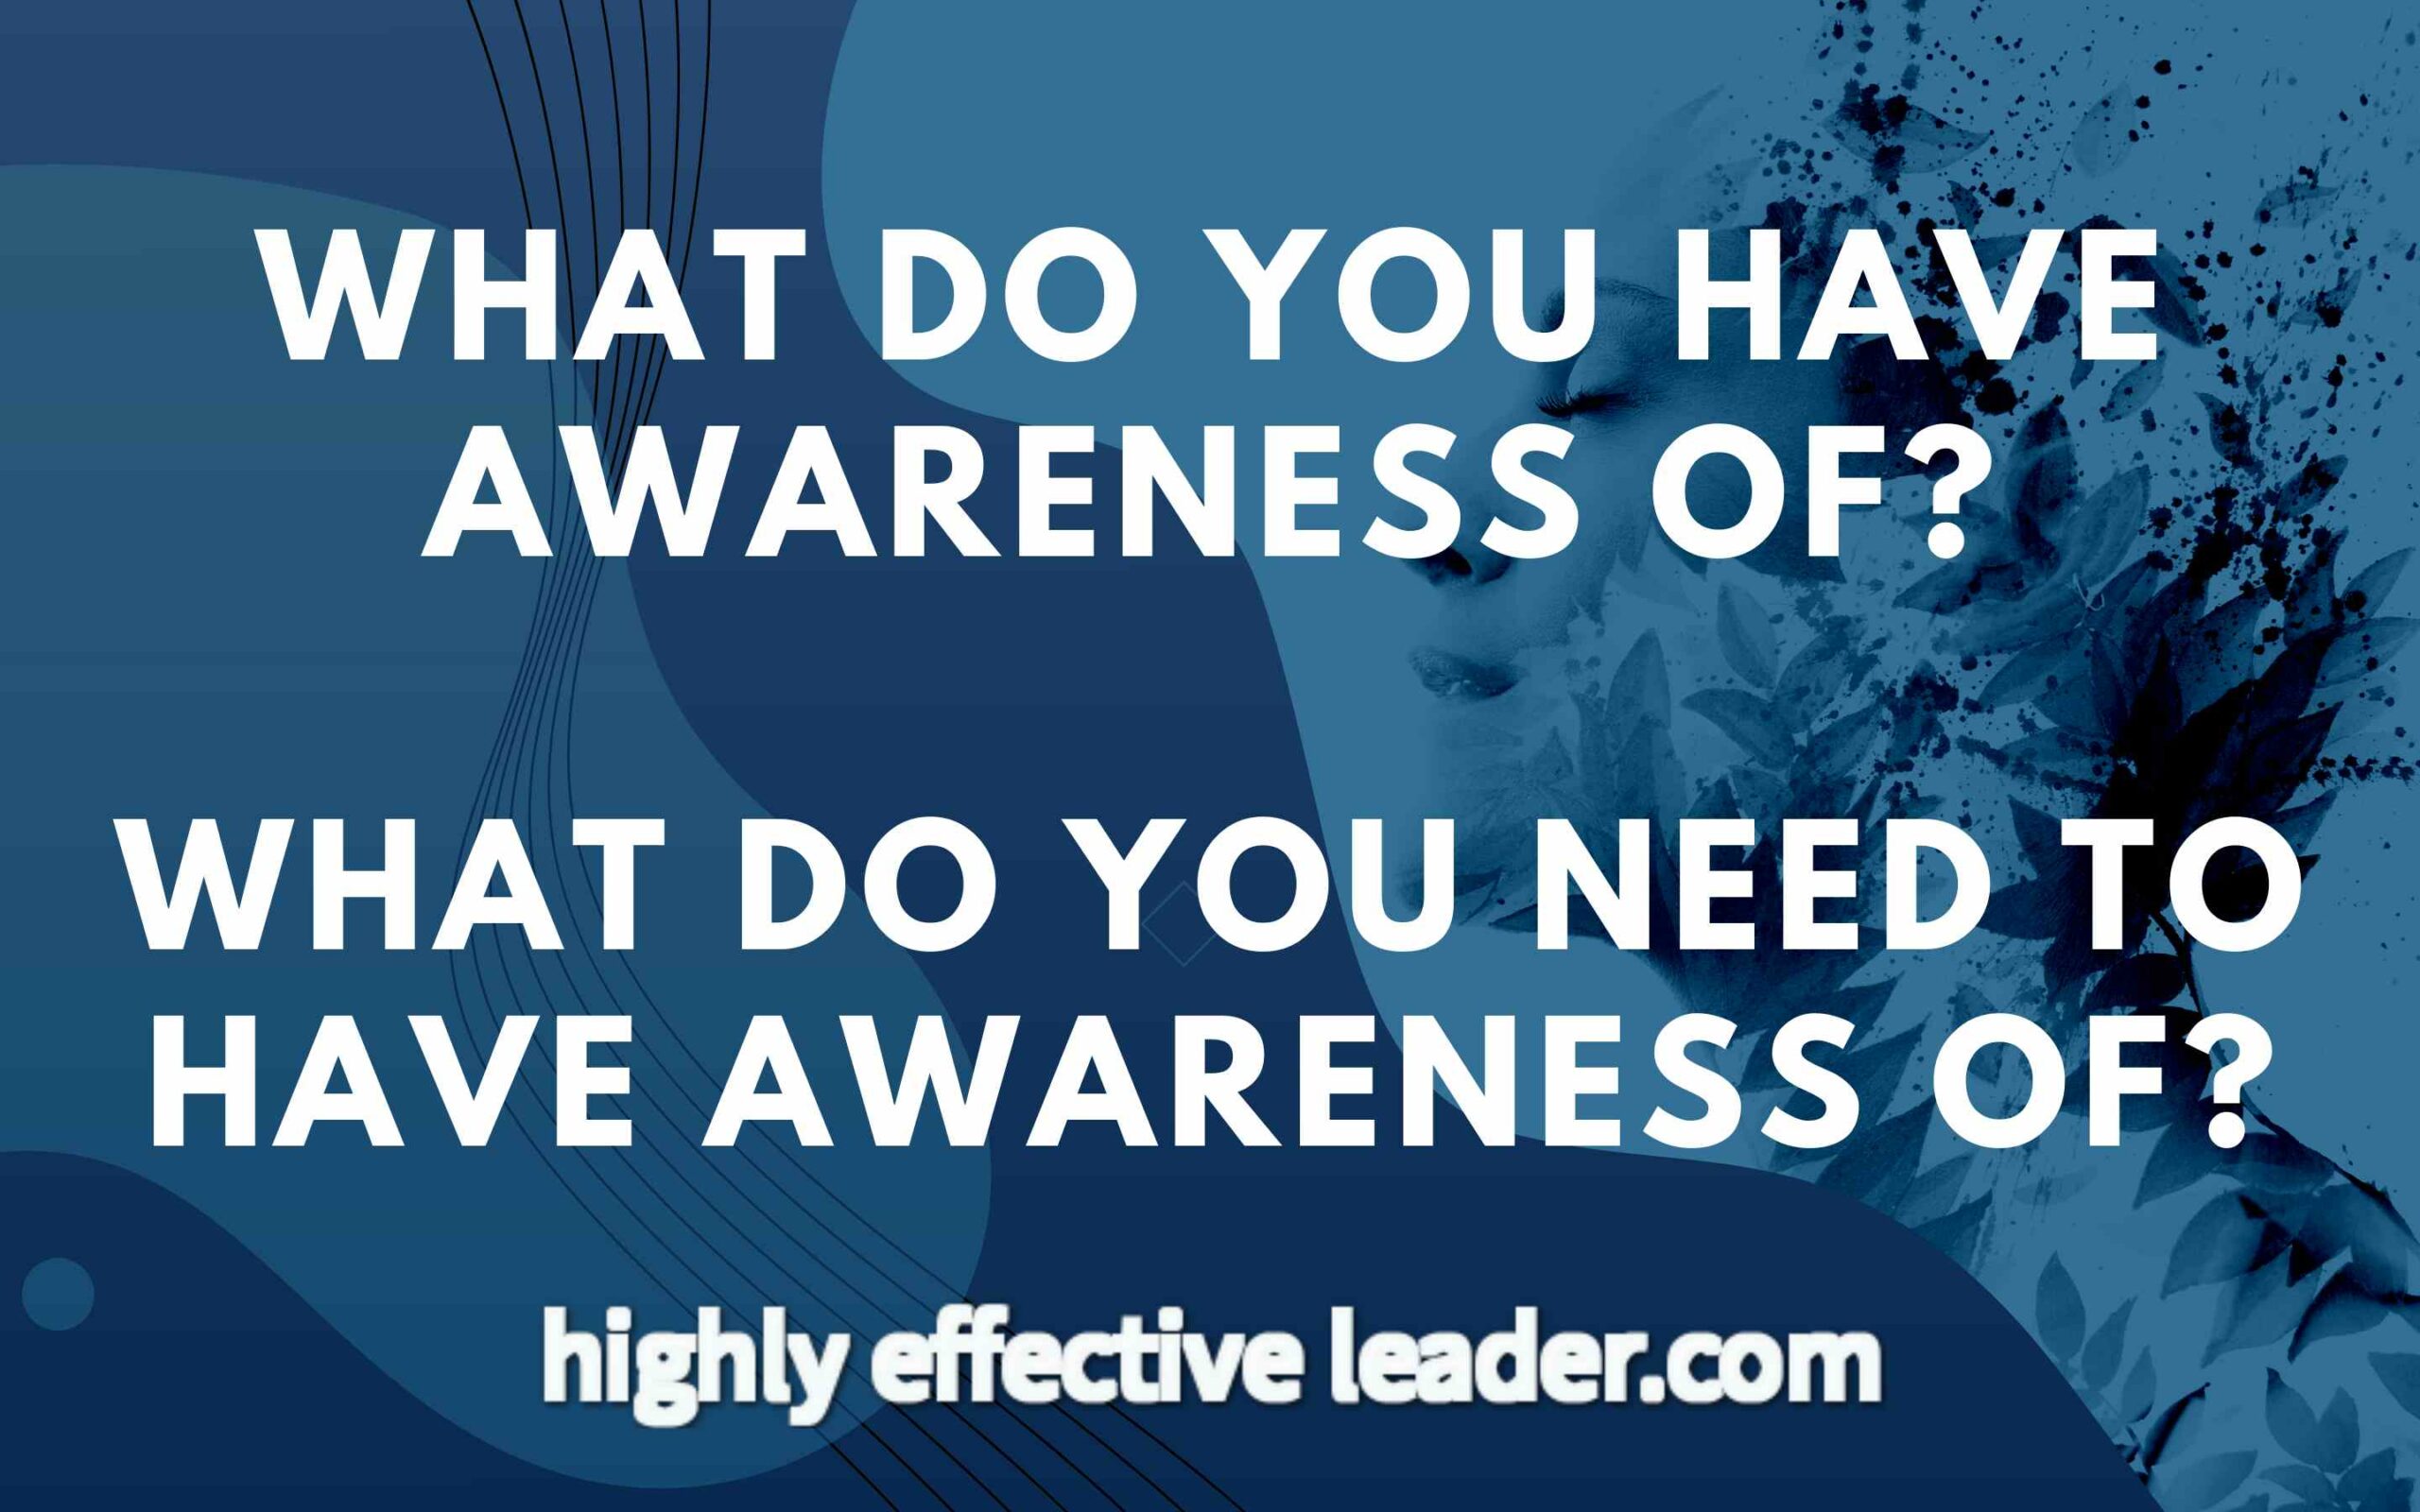 How Do You Raise Your Awareness?